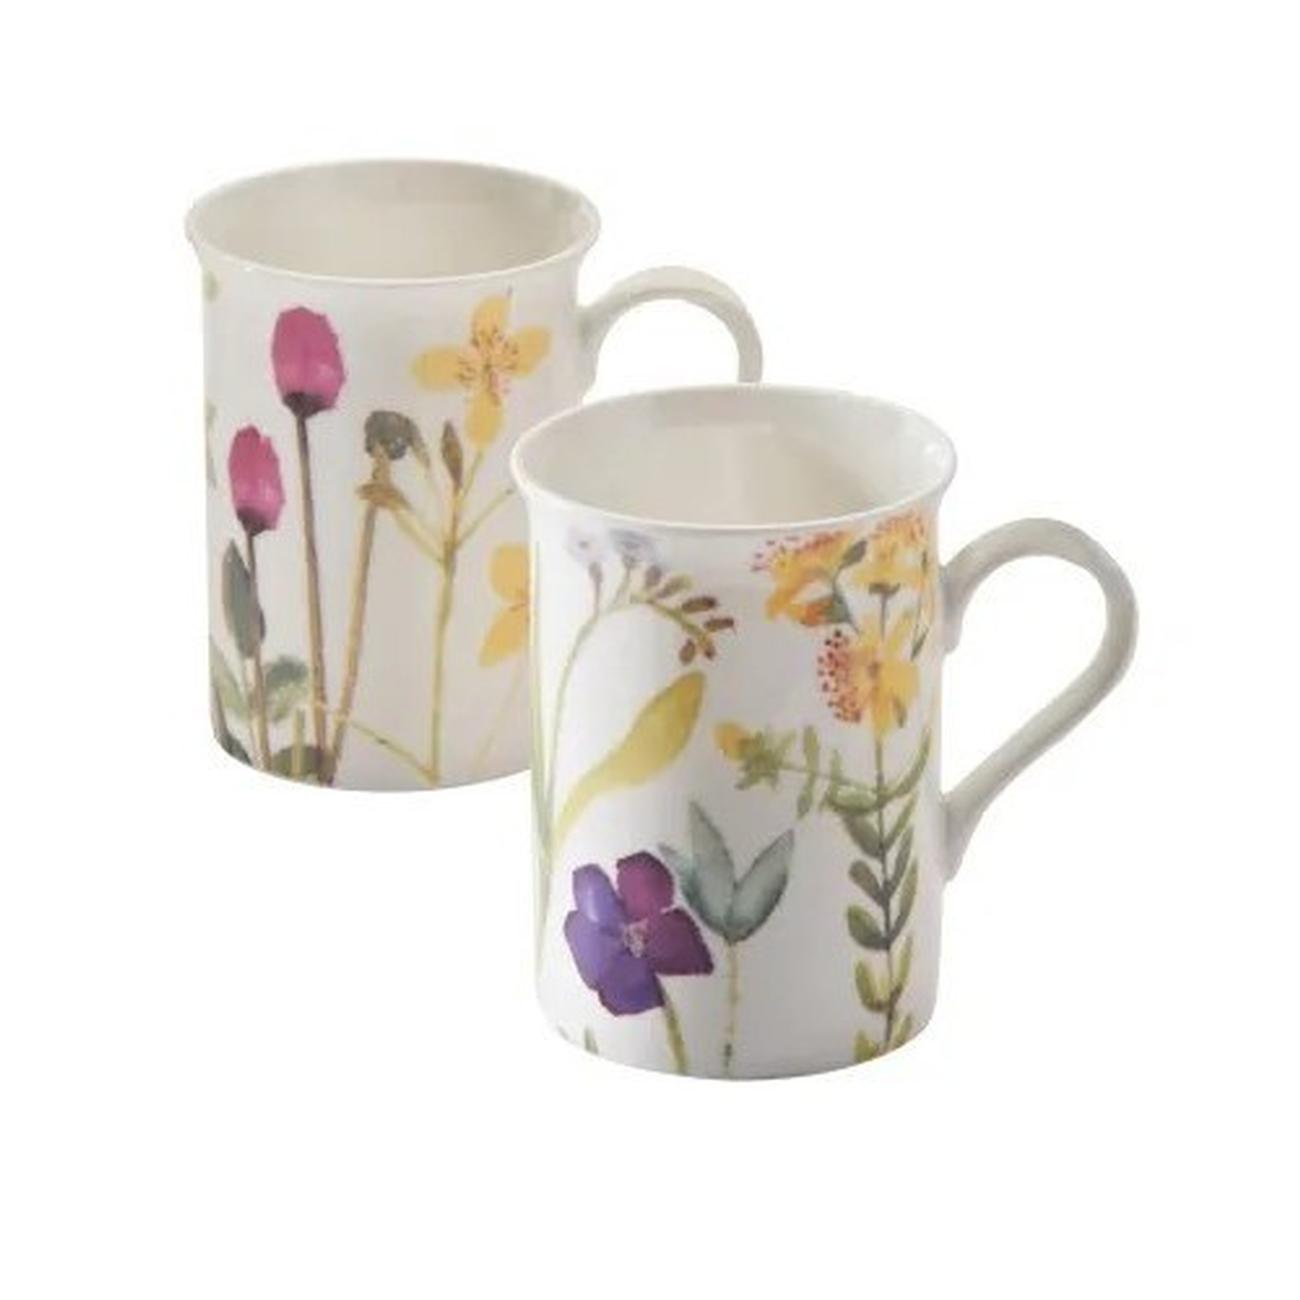 price-kensington-bloom-fine-china-mug - Price & Kensington Bloom Fine China Mug